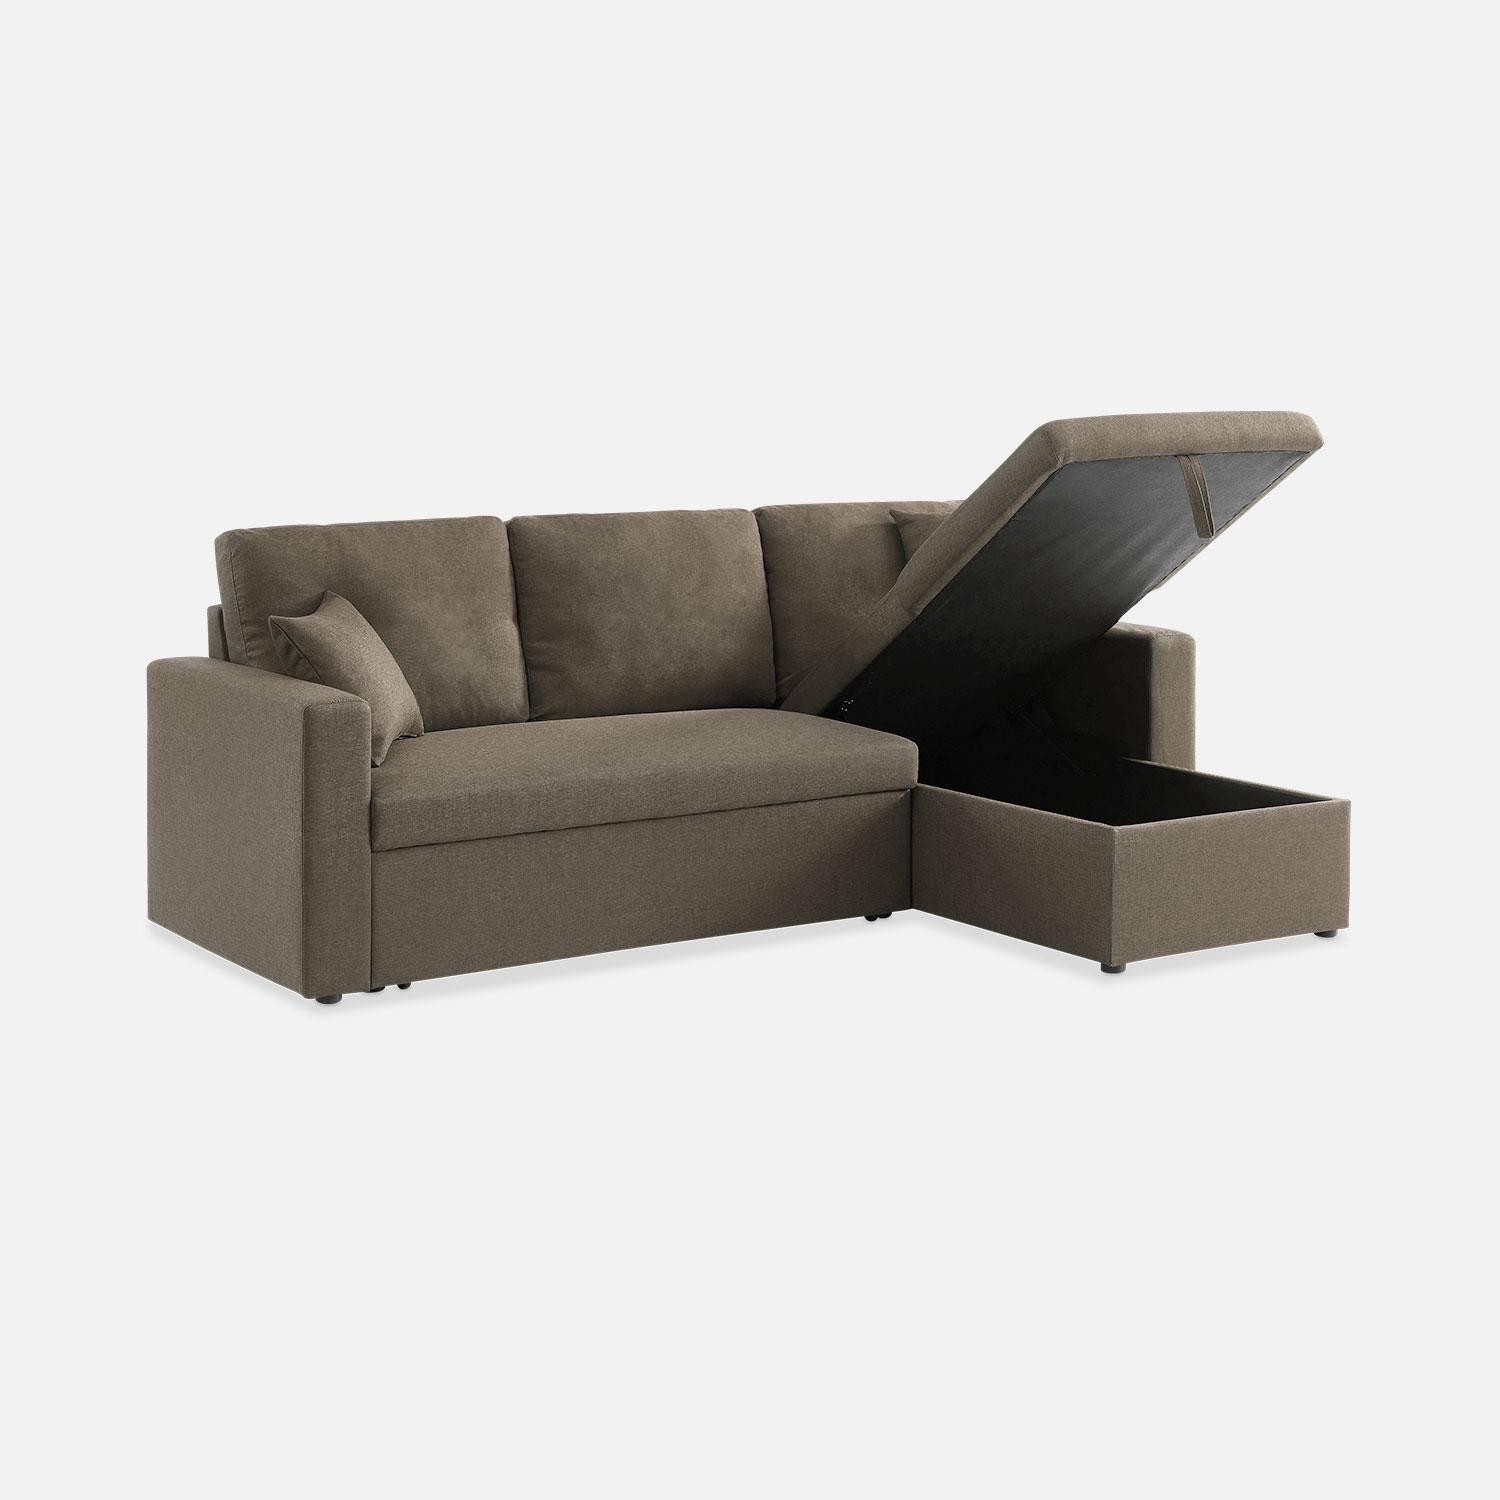 3-seater reversible brown corner sofa bed with storage box, brown, L219xD81xH68cm, IDA Photo8